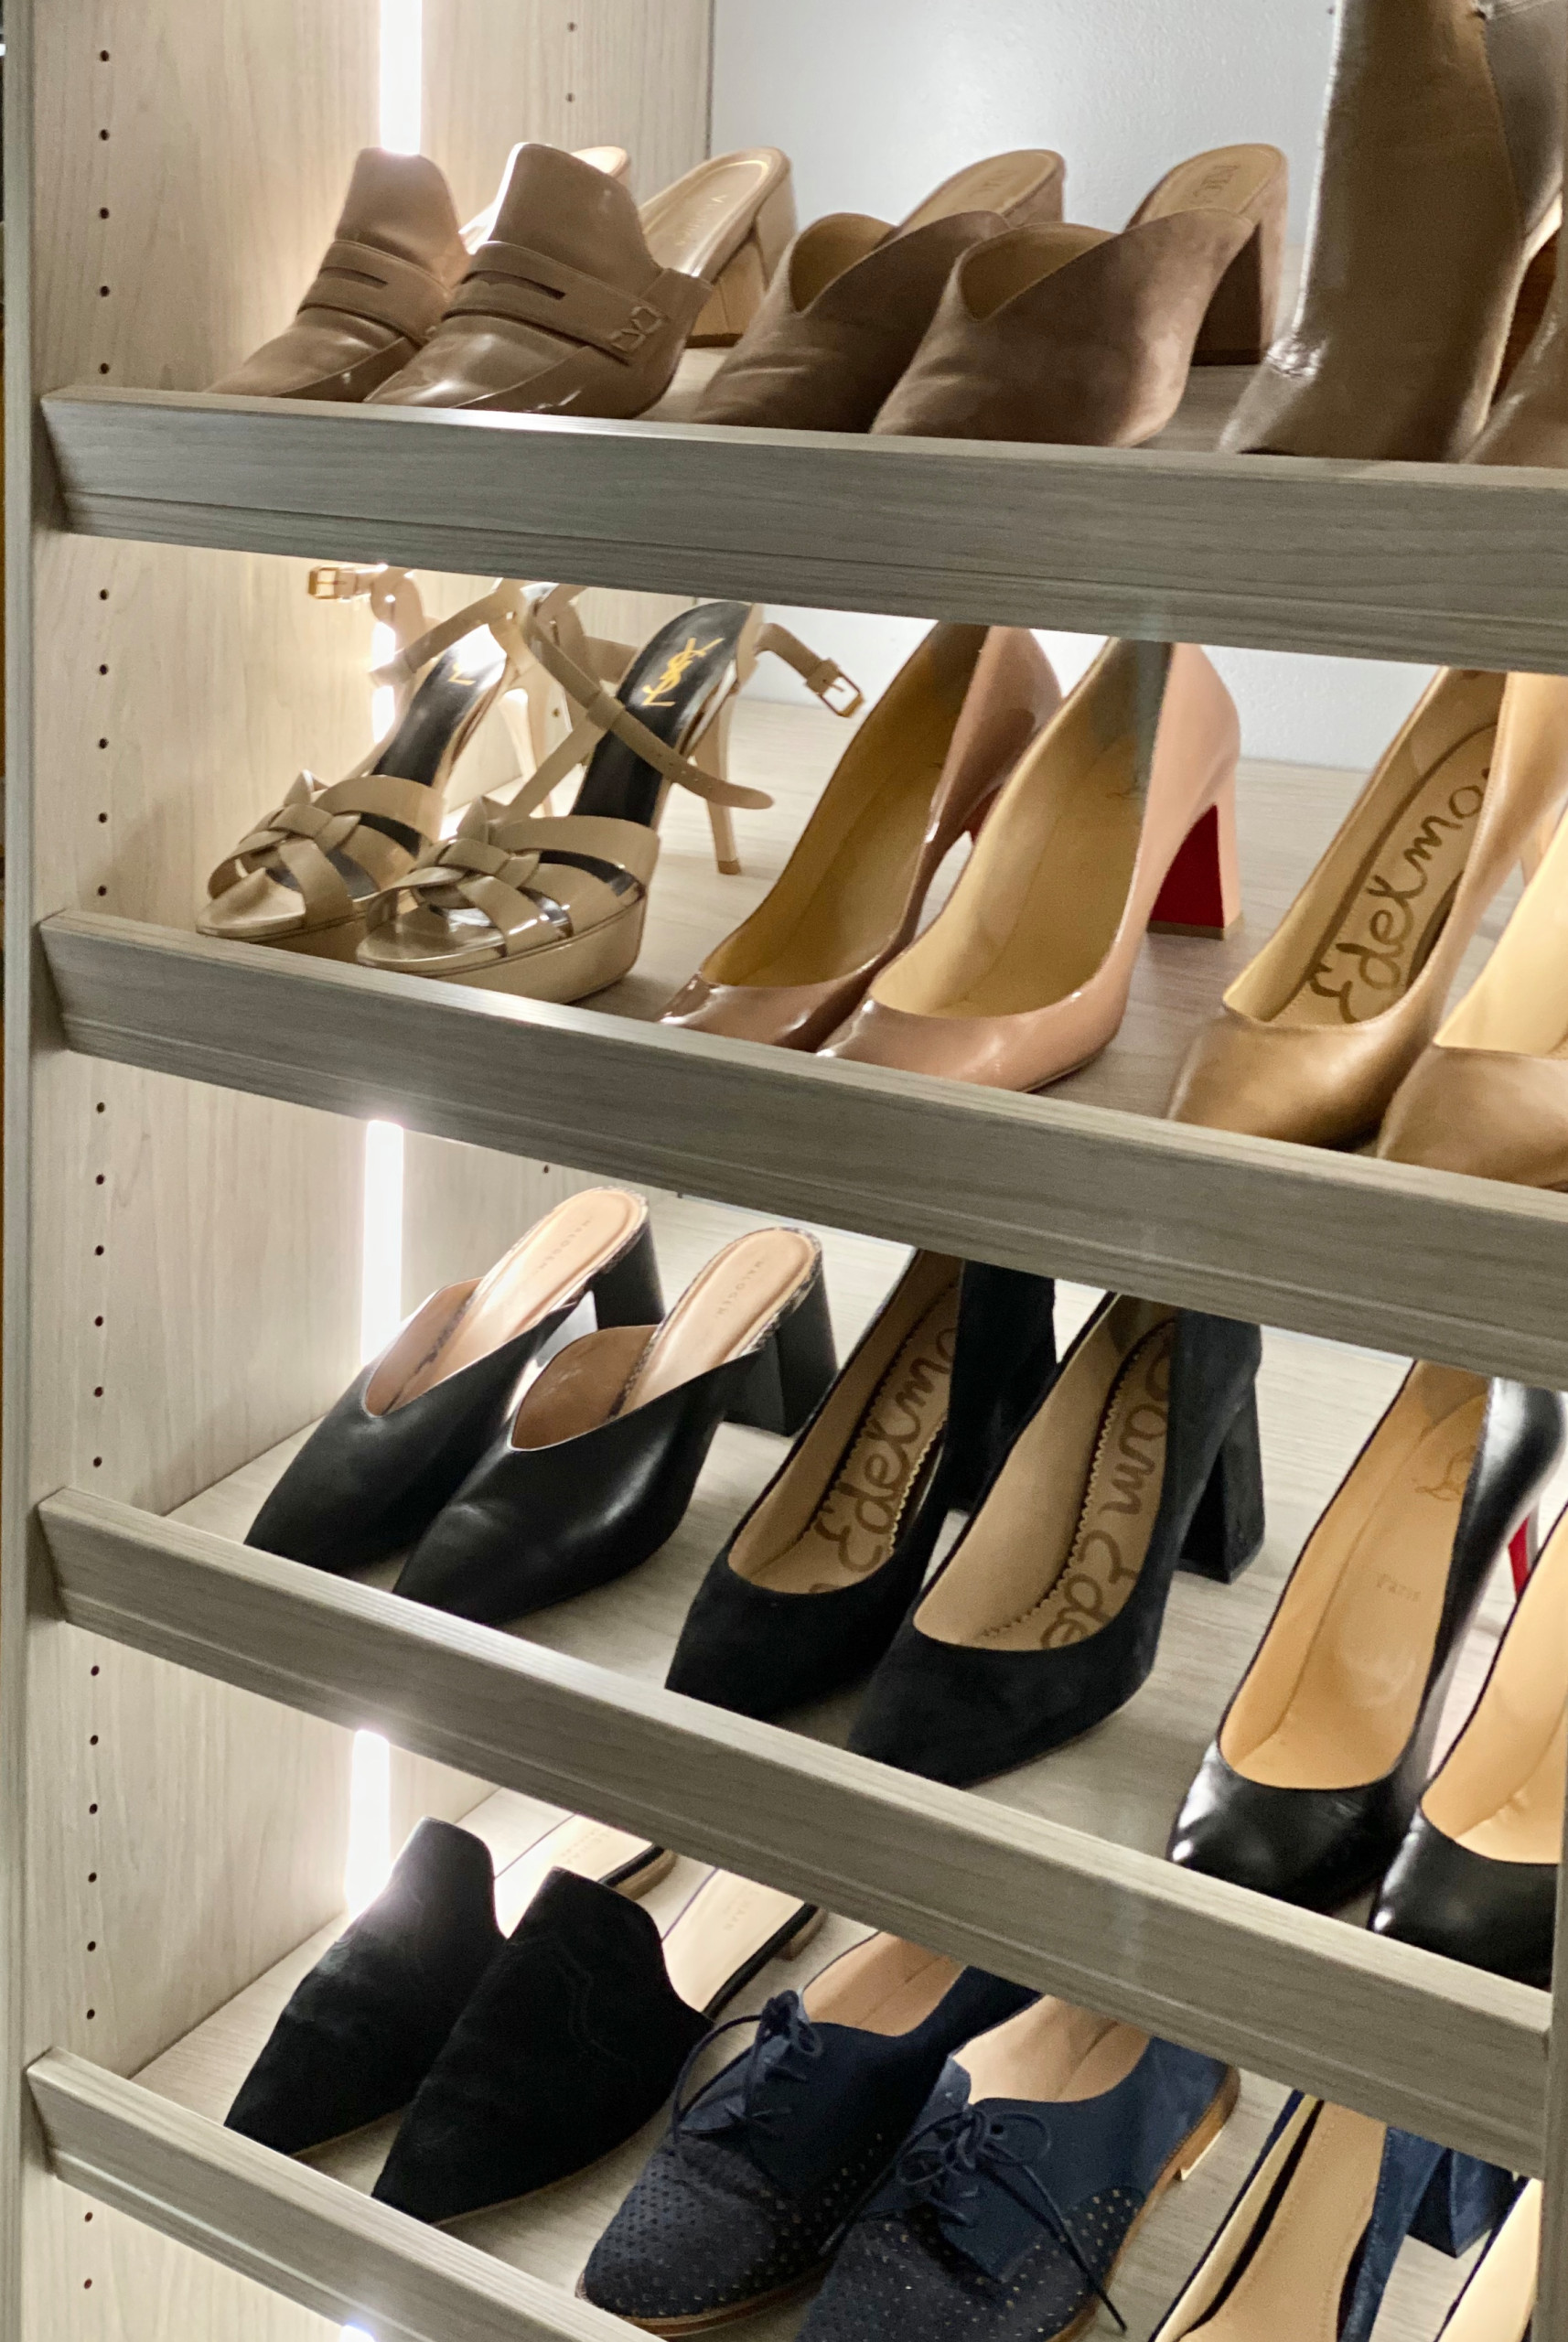 https://st.hzcdn.com/simgs/pictures/closets/slanted-shoe-shelves-bella-systems-custom-closets-img~0a917f940ea8664f_14-4940-1-e978f6d.jpg